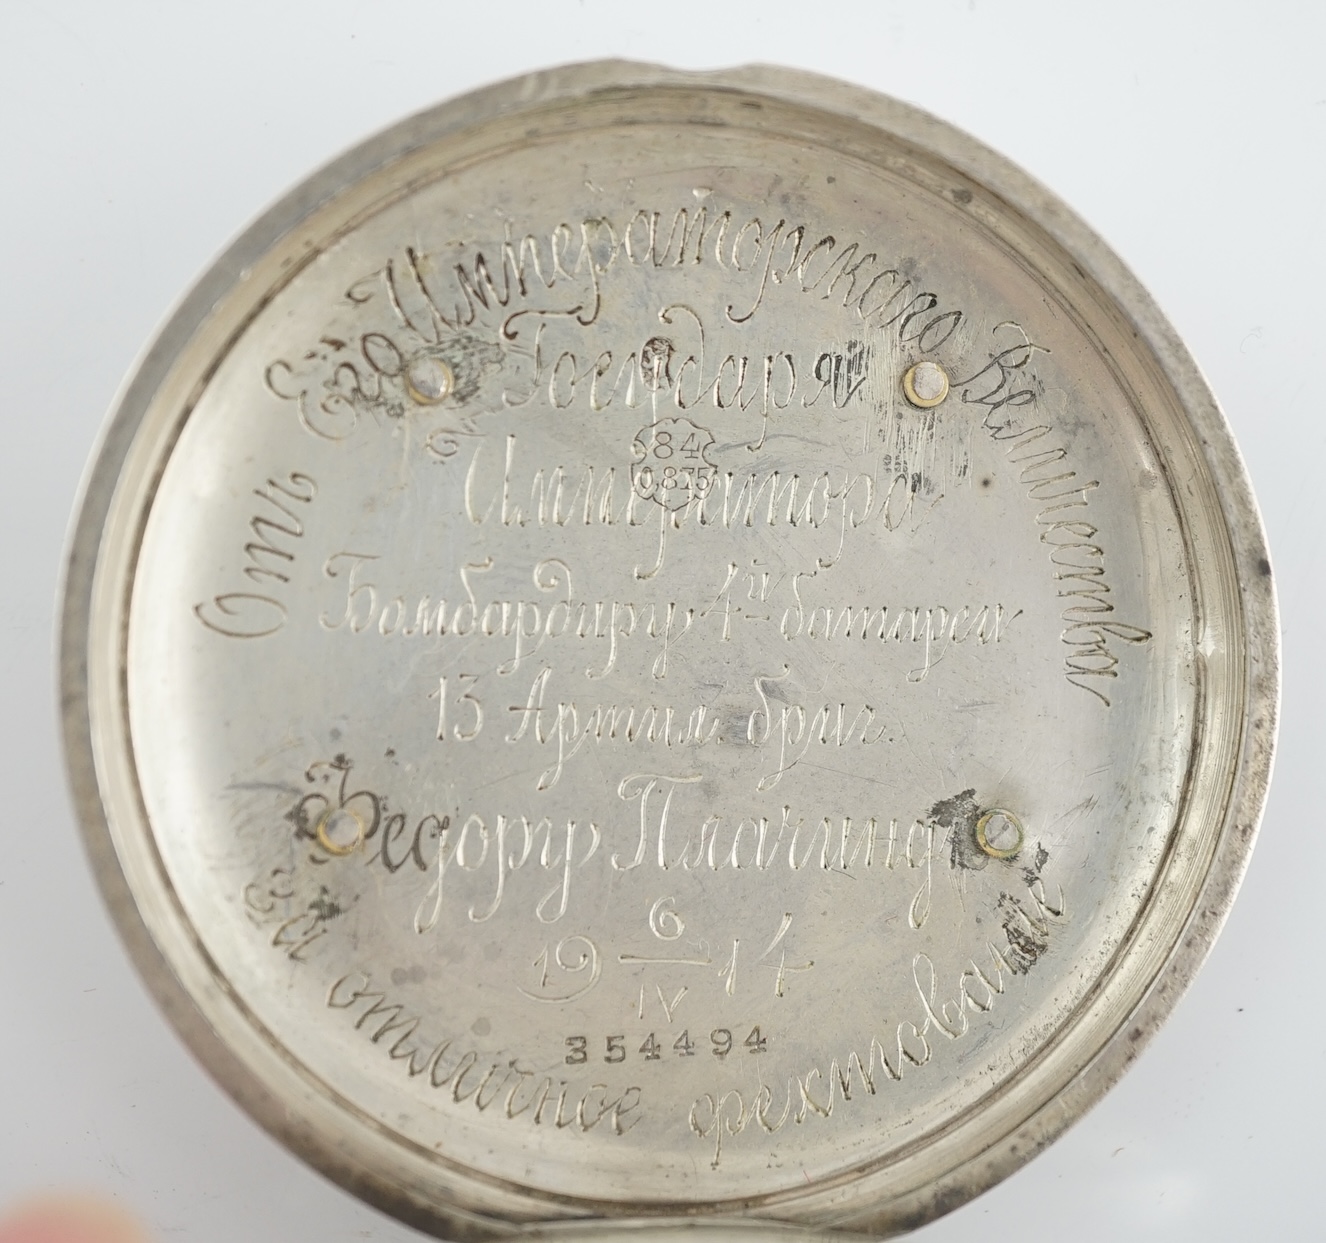 An early 20th century Russian 84 zolotnik silver hunter keyless pocket watch by Pavel Bure